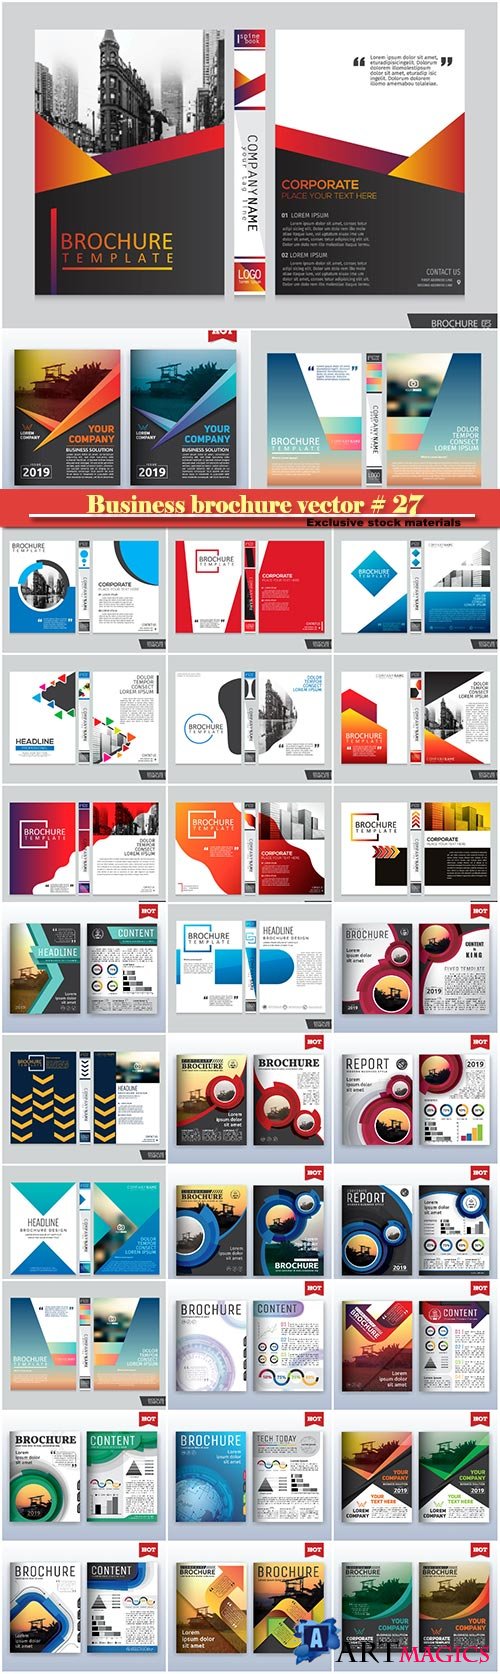 Business brochure vector, flyers templates # 27